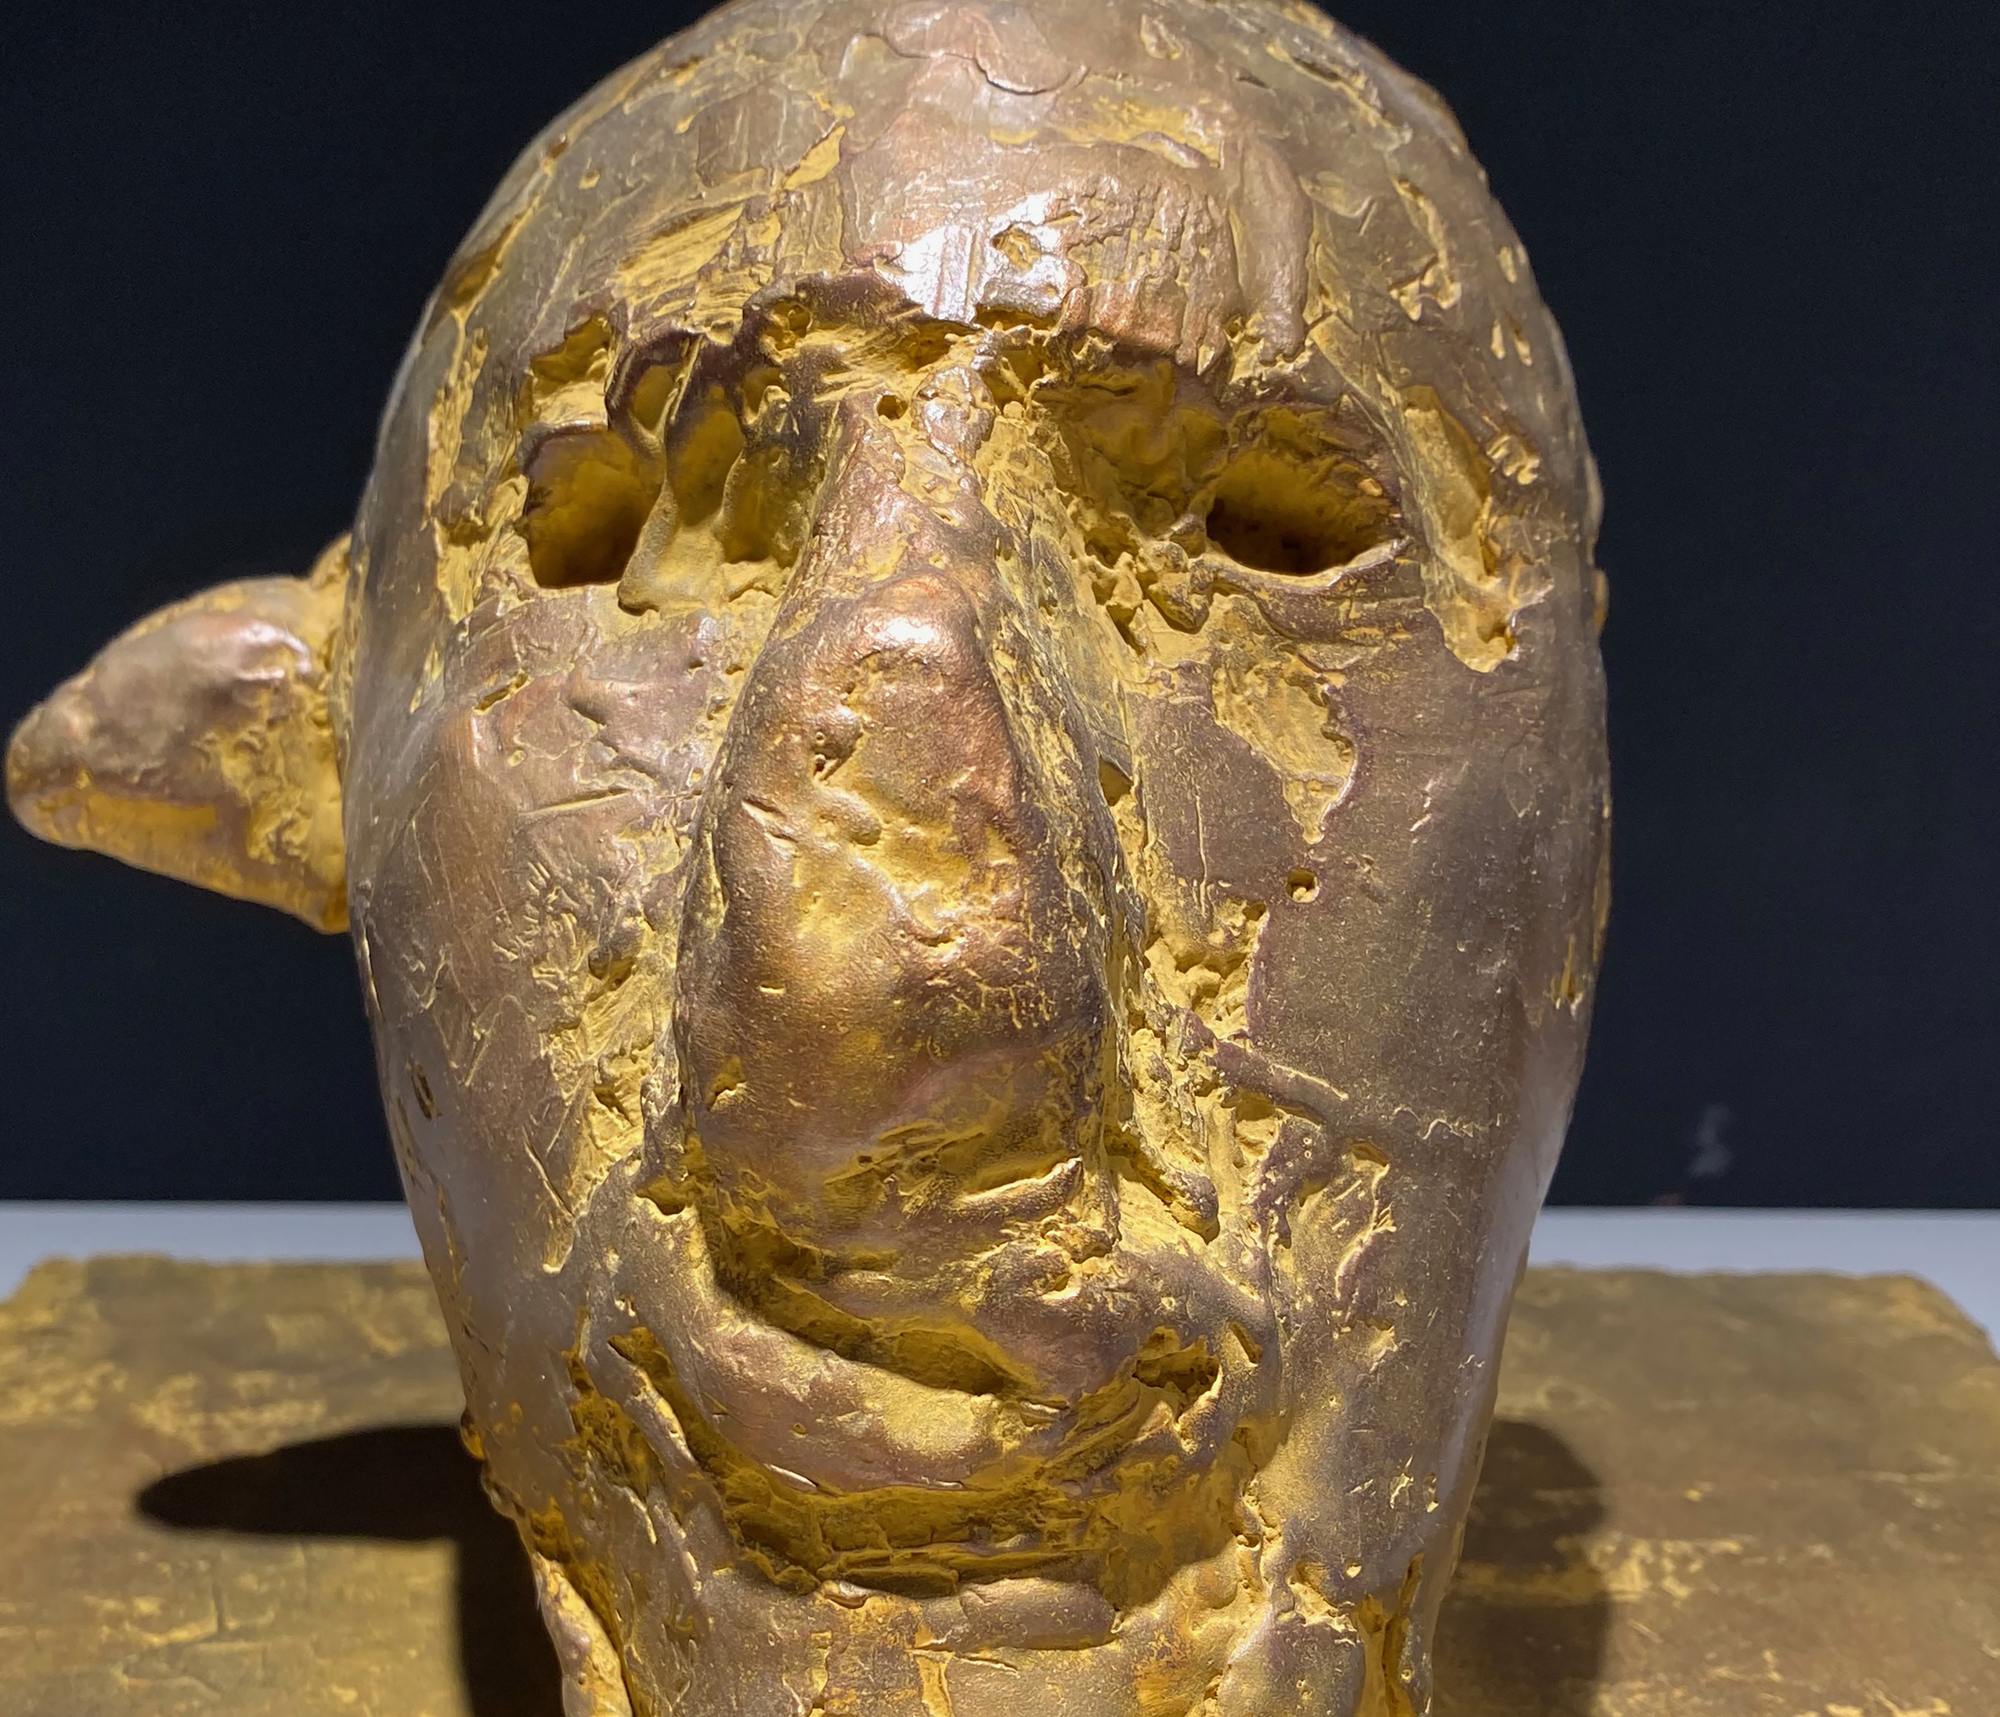 NATHAN OLIVEIRA - Mask #6 (Metallic) - bronze with acrylic - 9 x 11 3/4 x 11 3/4 in.